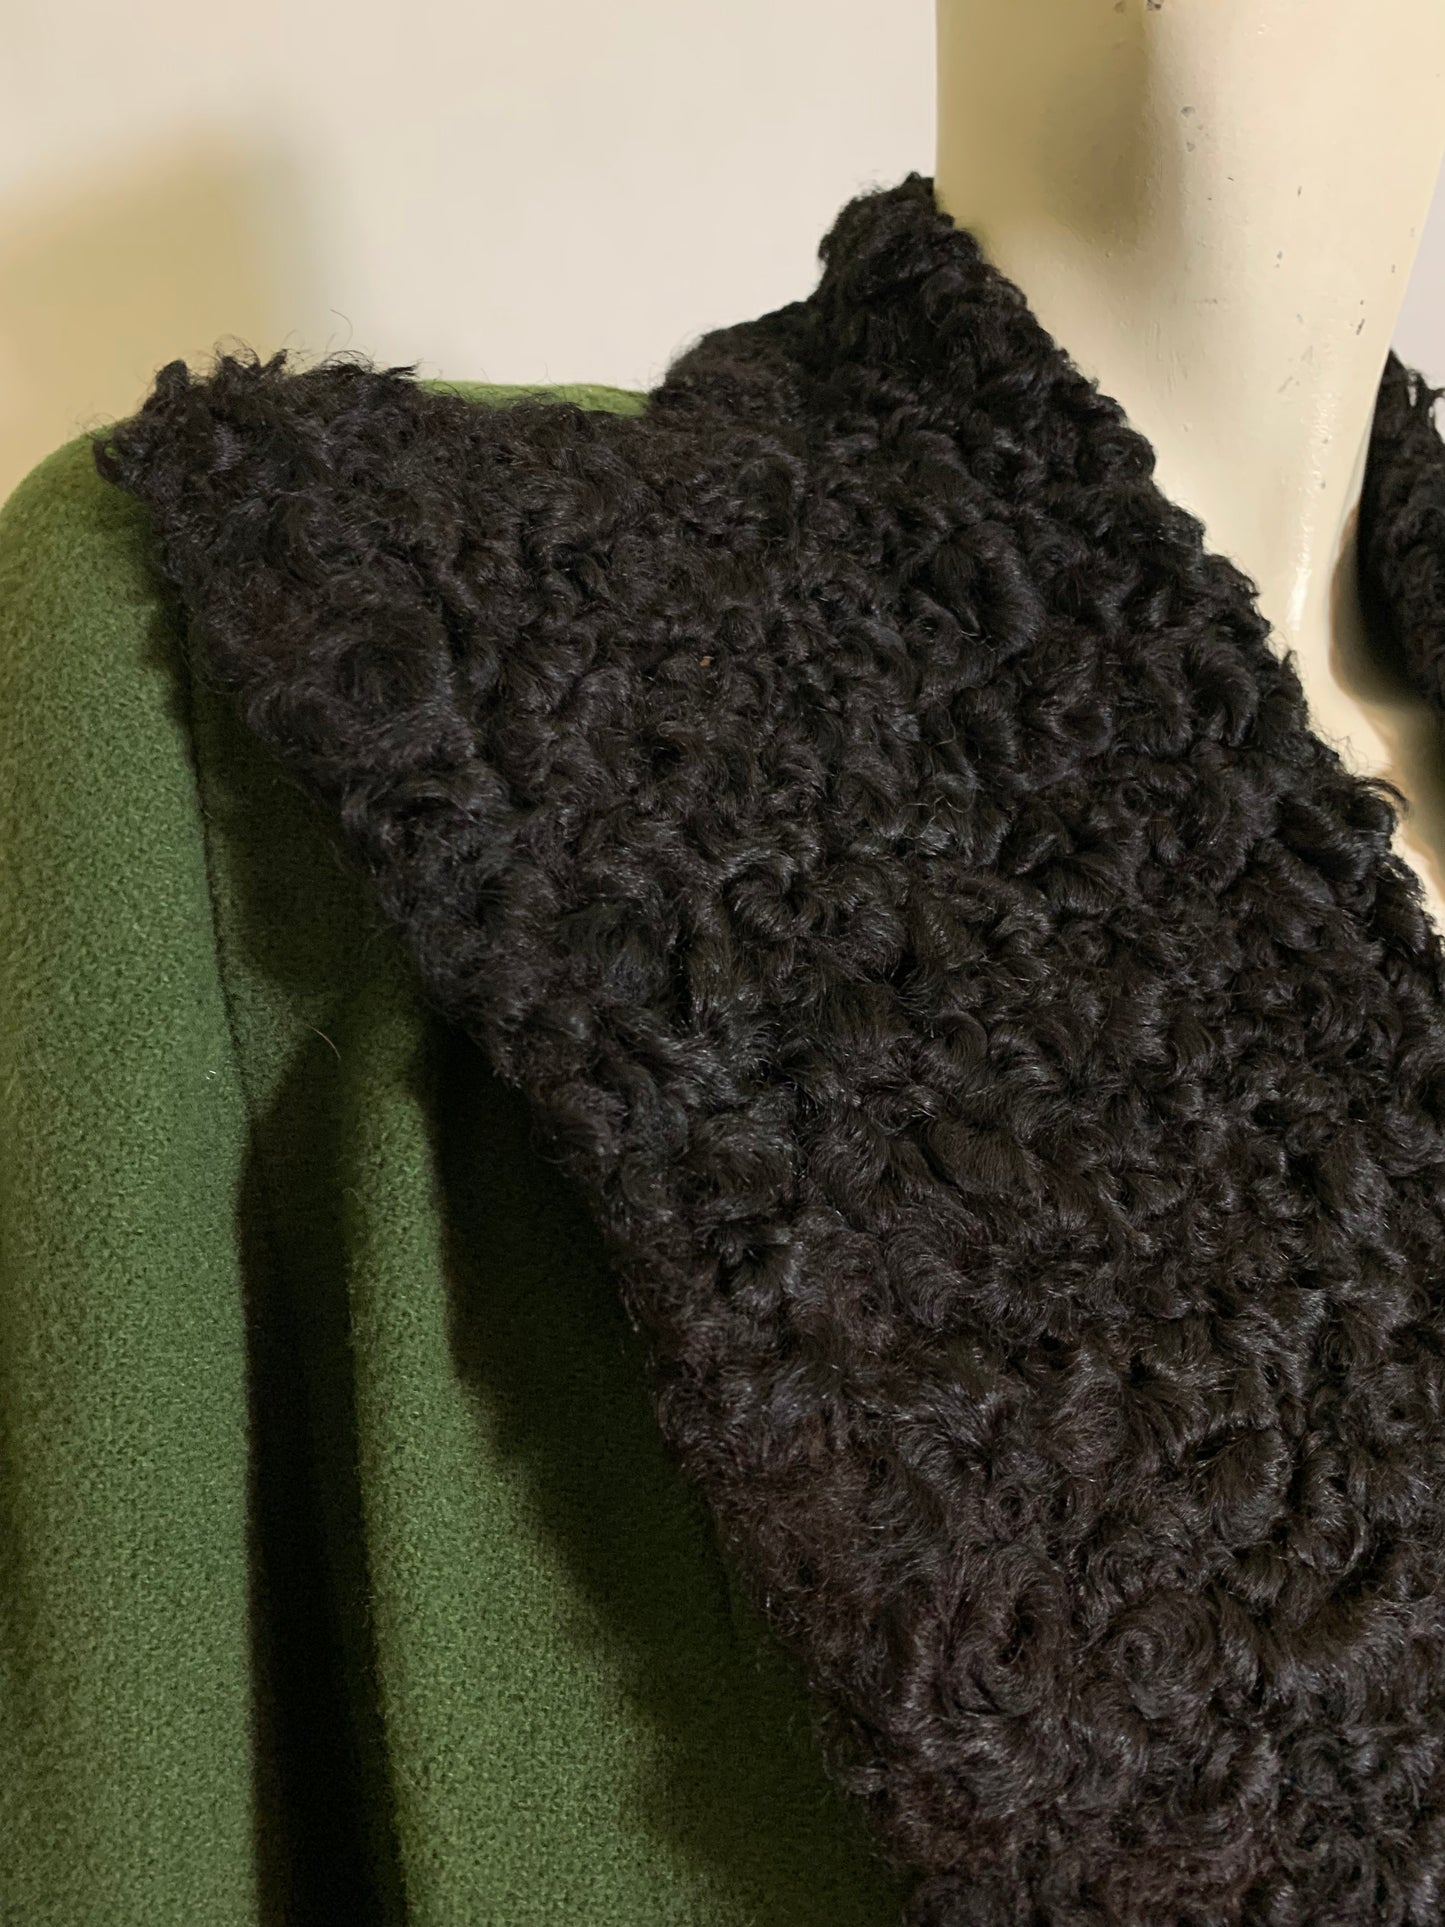 Olive Green Wool Coat with Dramatic Black Persian Lamb Collar circa 1940s